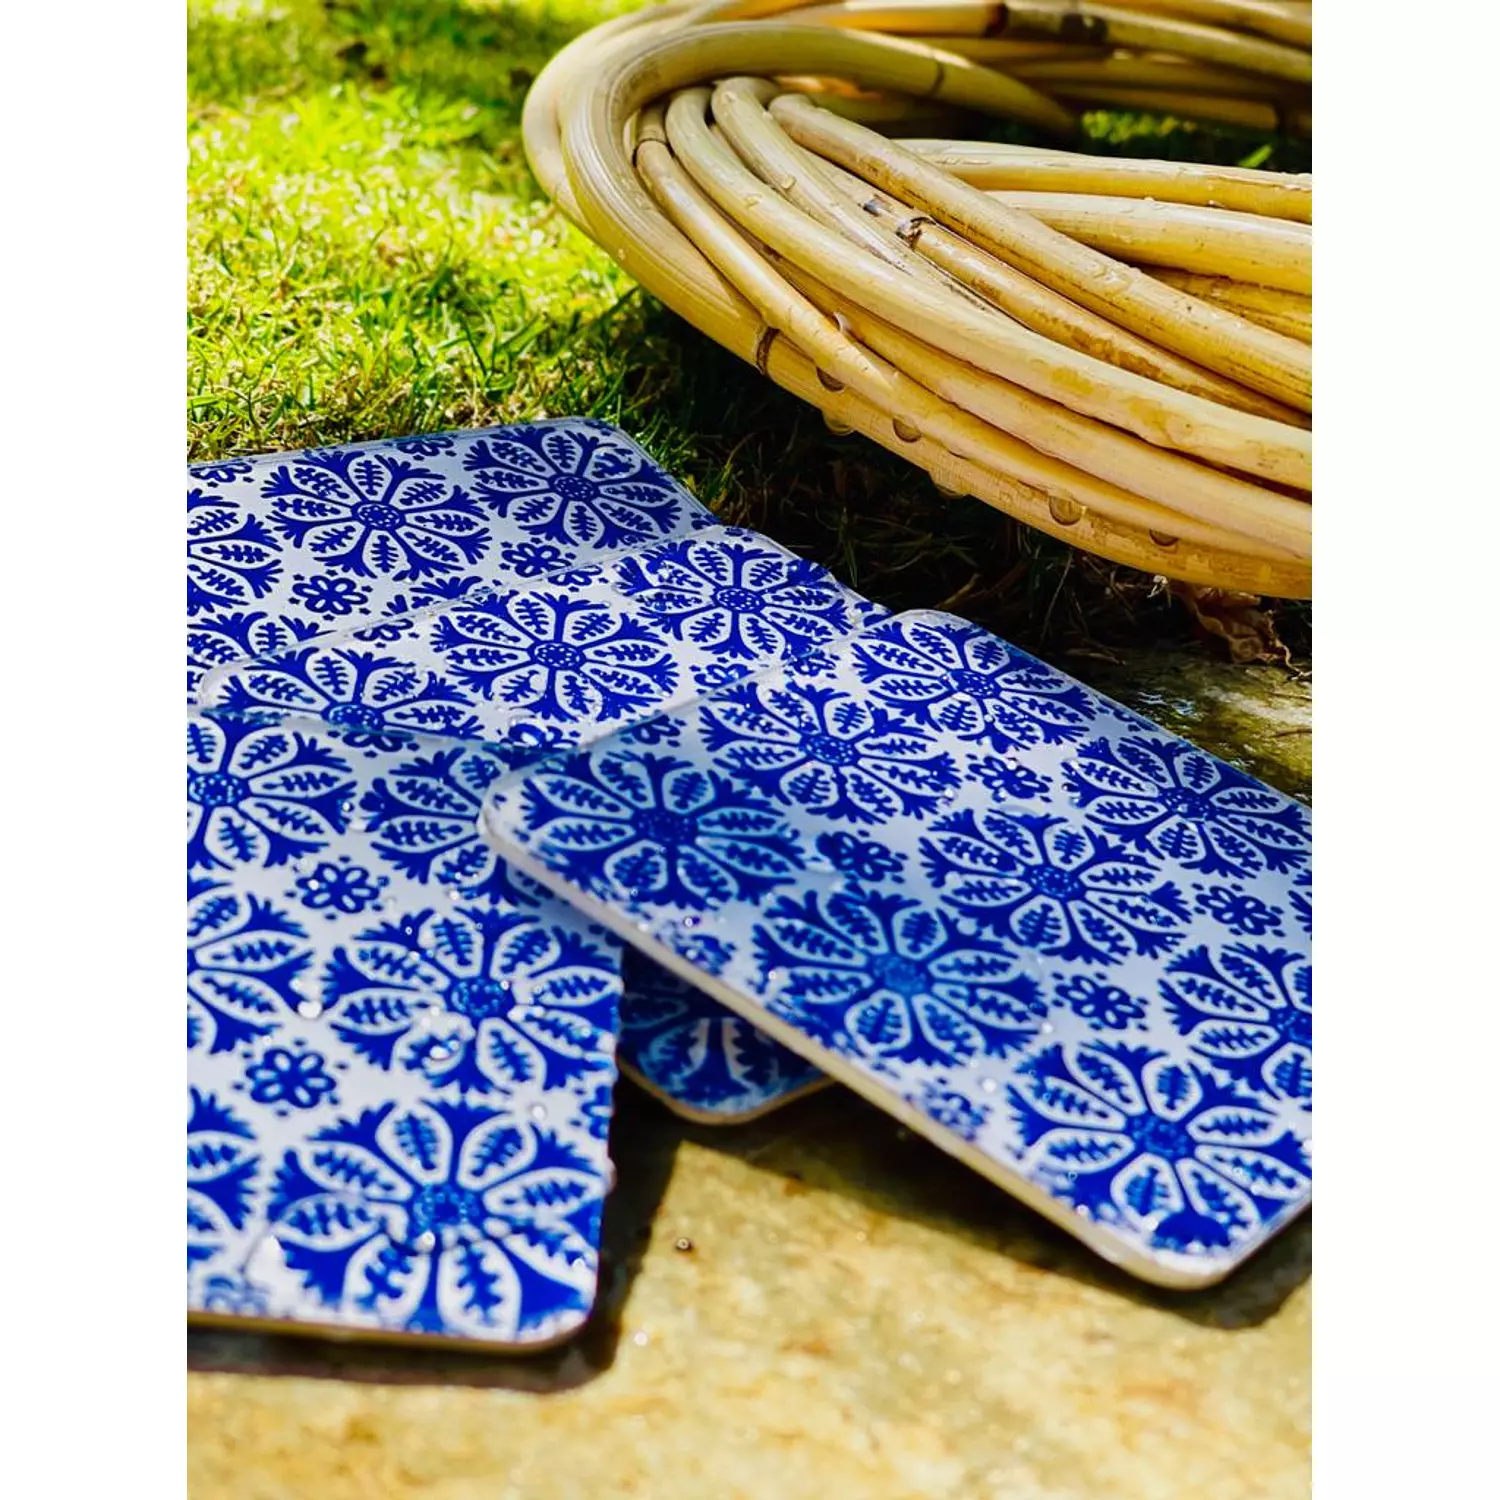 Blue Morrocan Tiles Coaster hover image